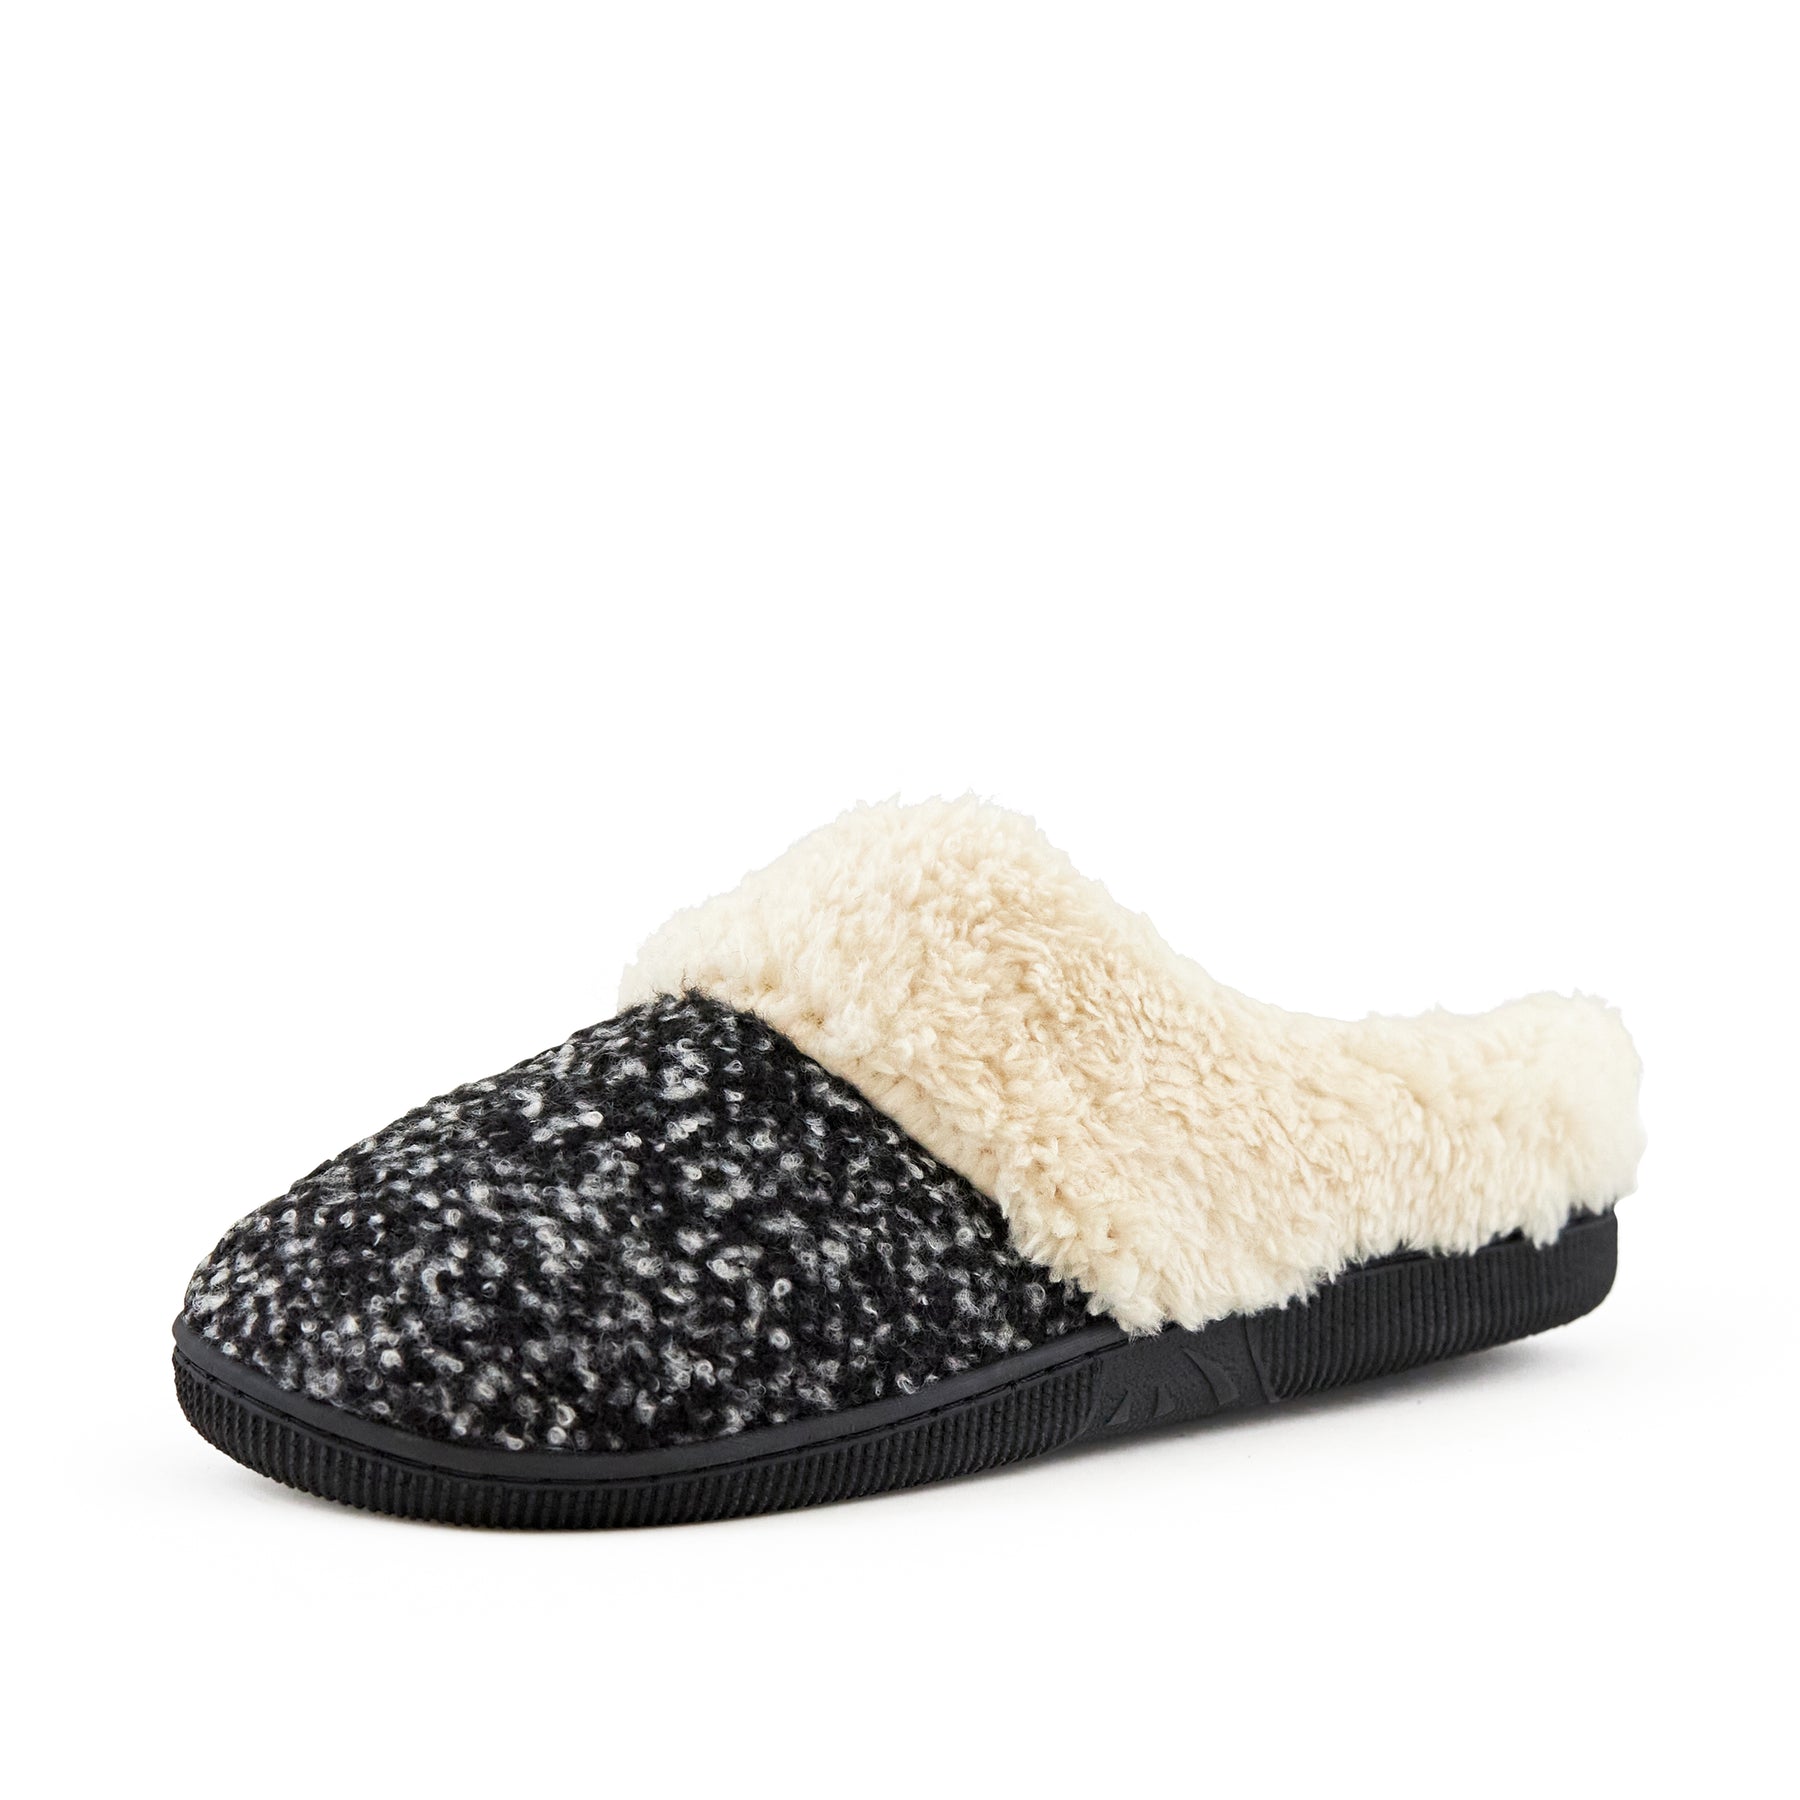 Nest Shoes Women's Cozy Slipper Grey Crumble | Ecofriendly